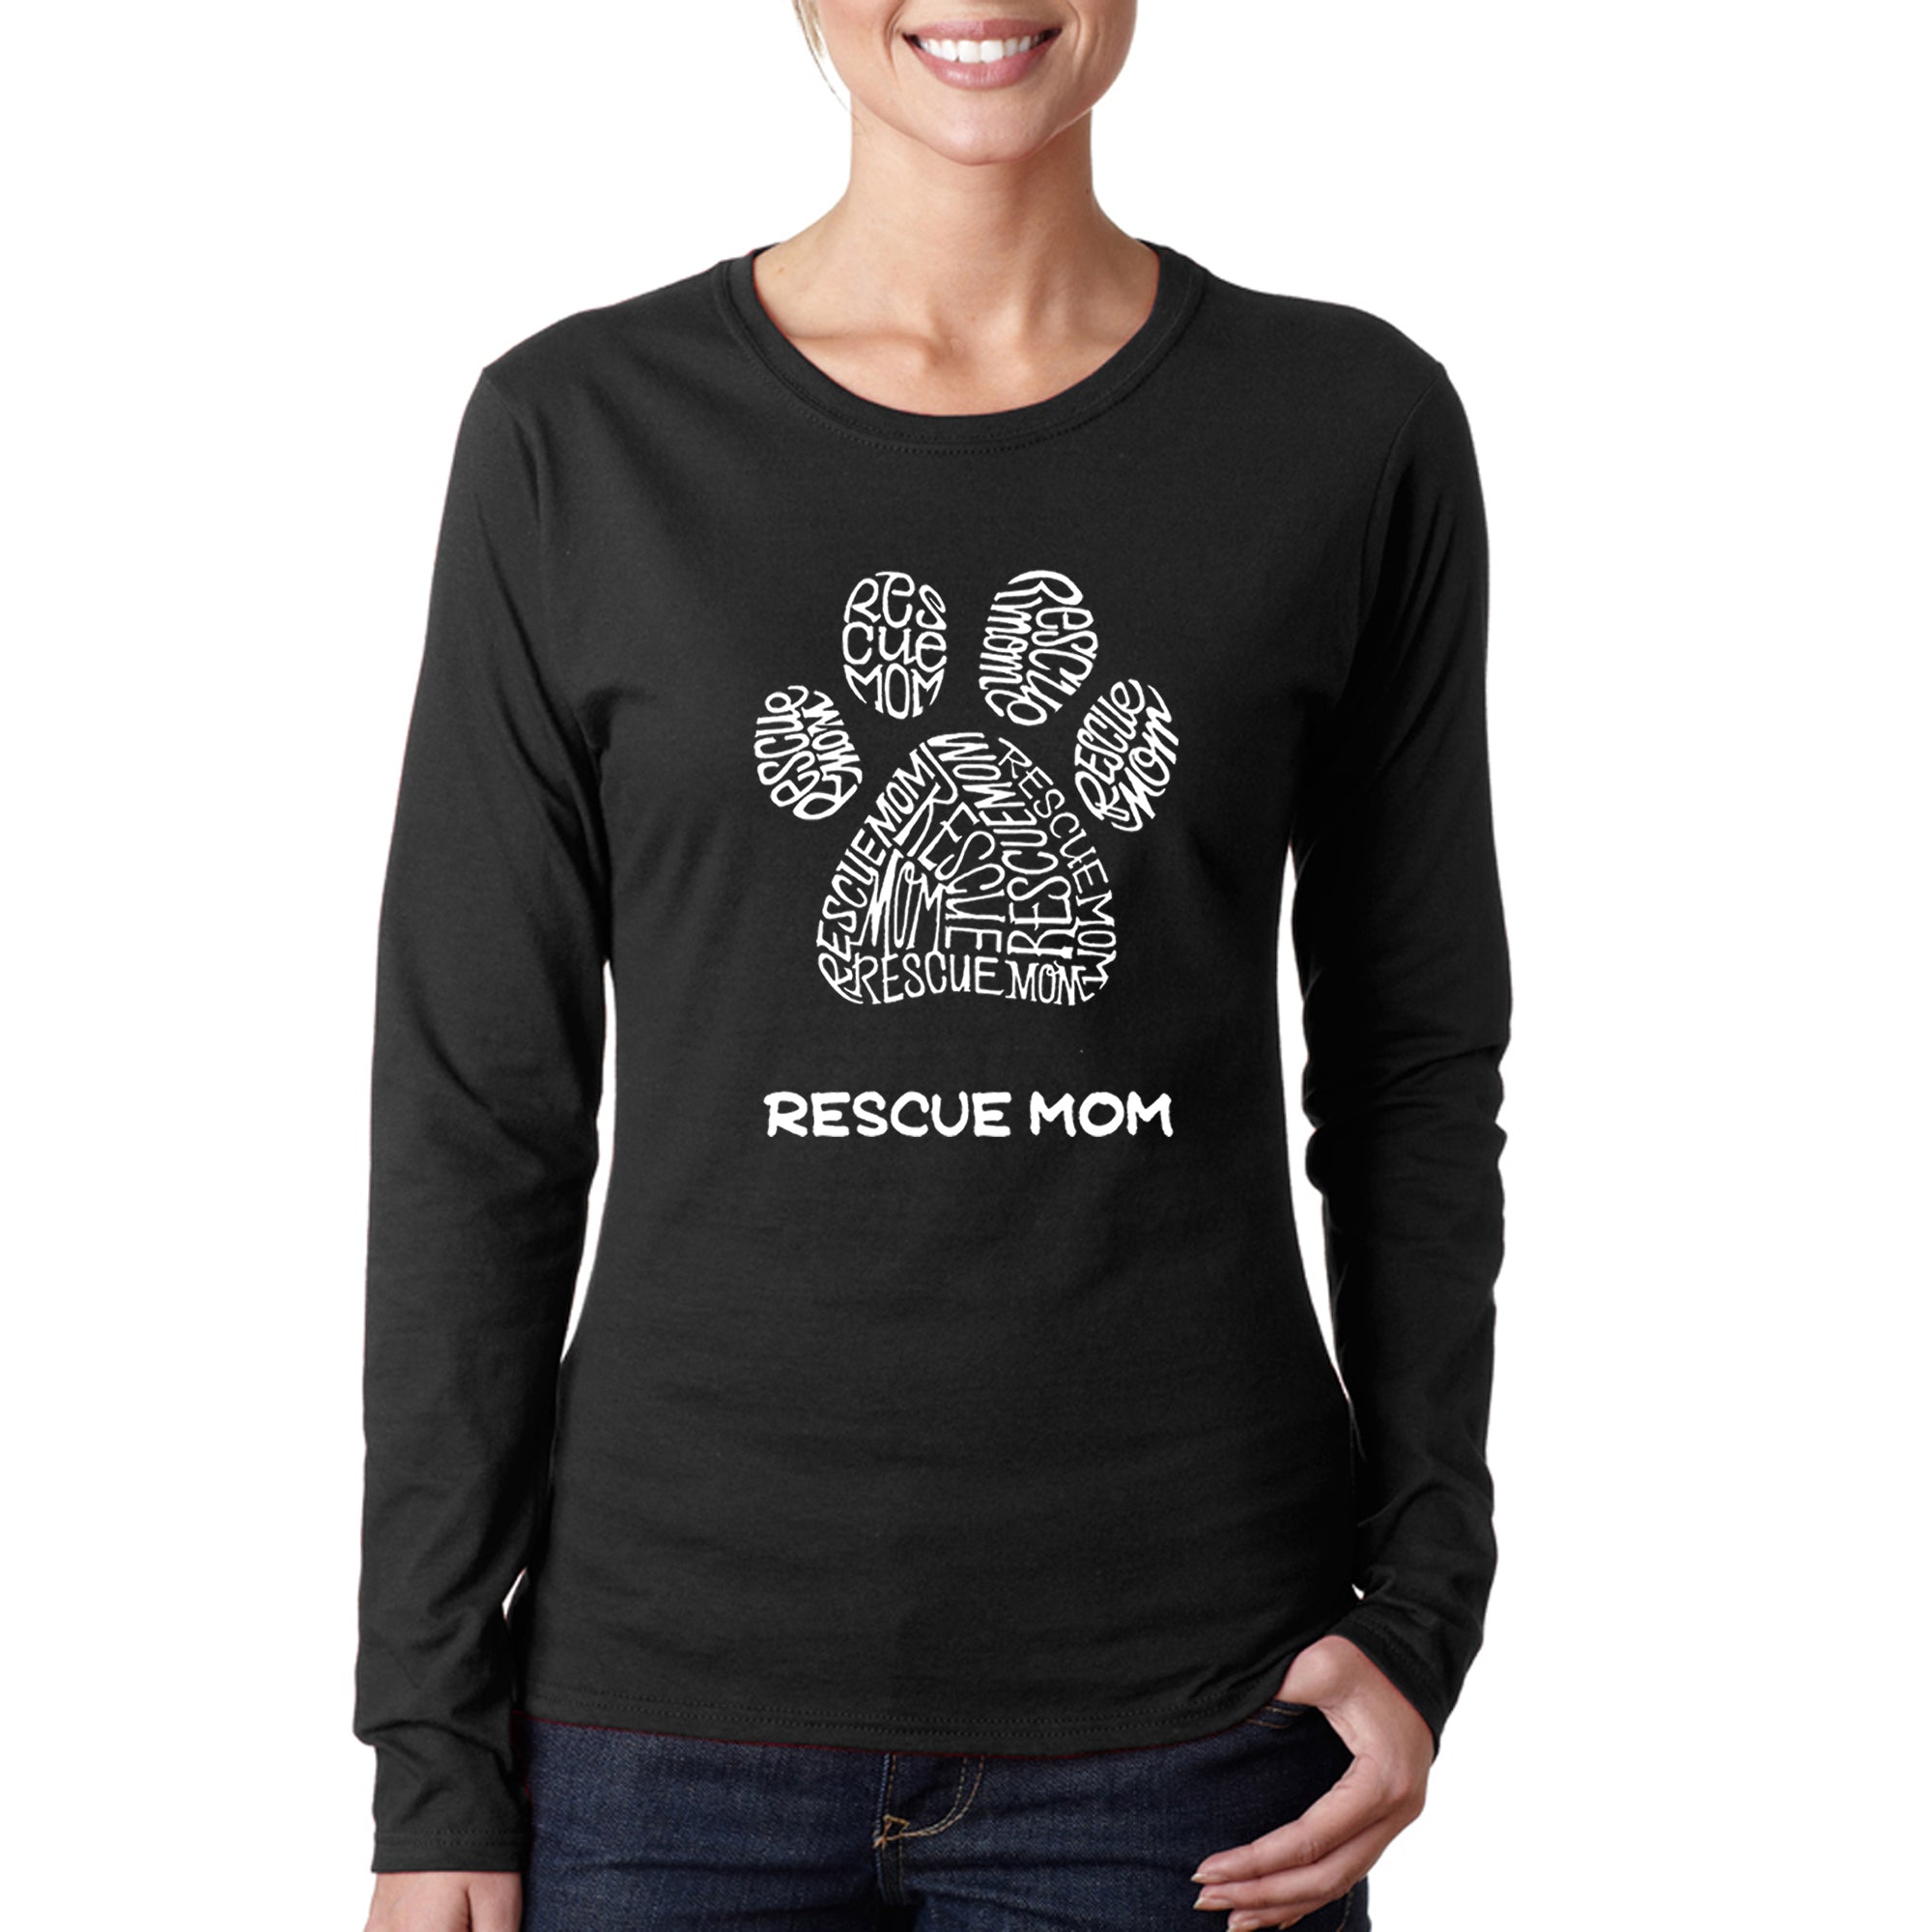 Rescue Mom - Women's Word Art Long Sleeve T-Shirt - Black - X-Large